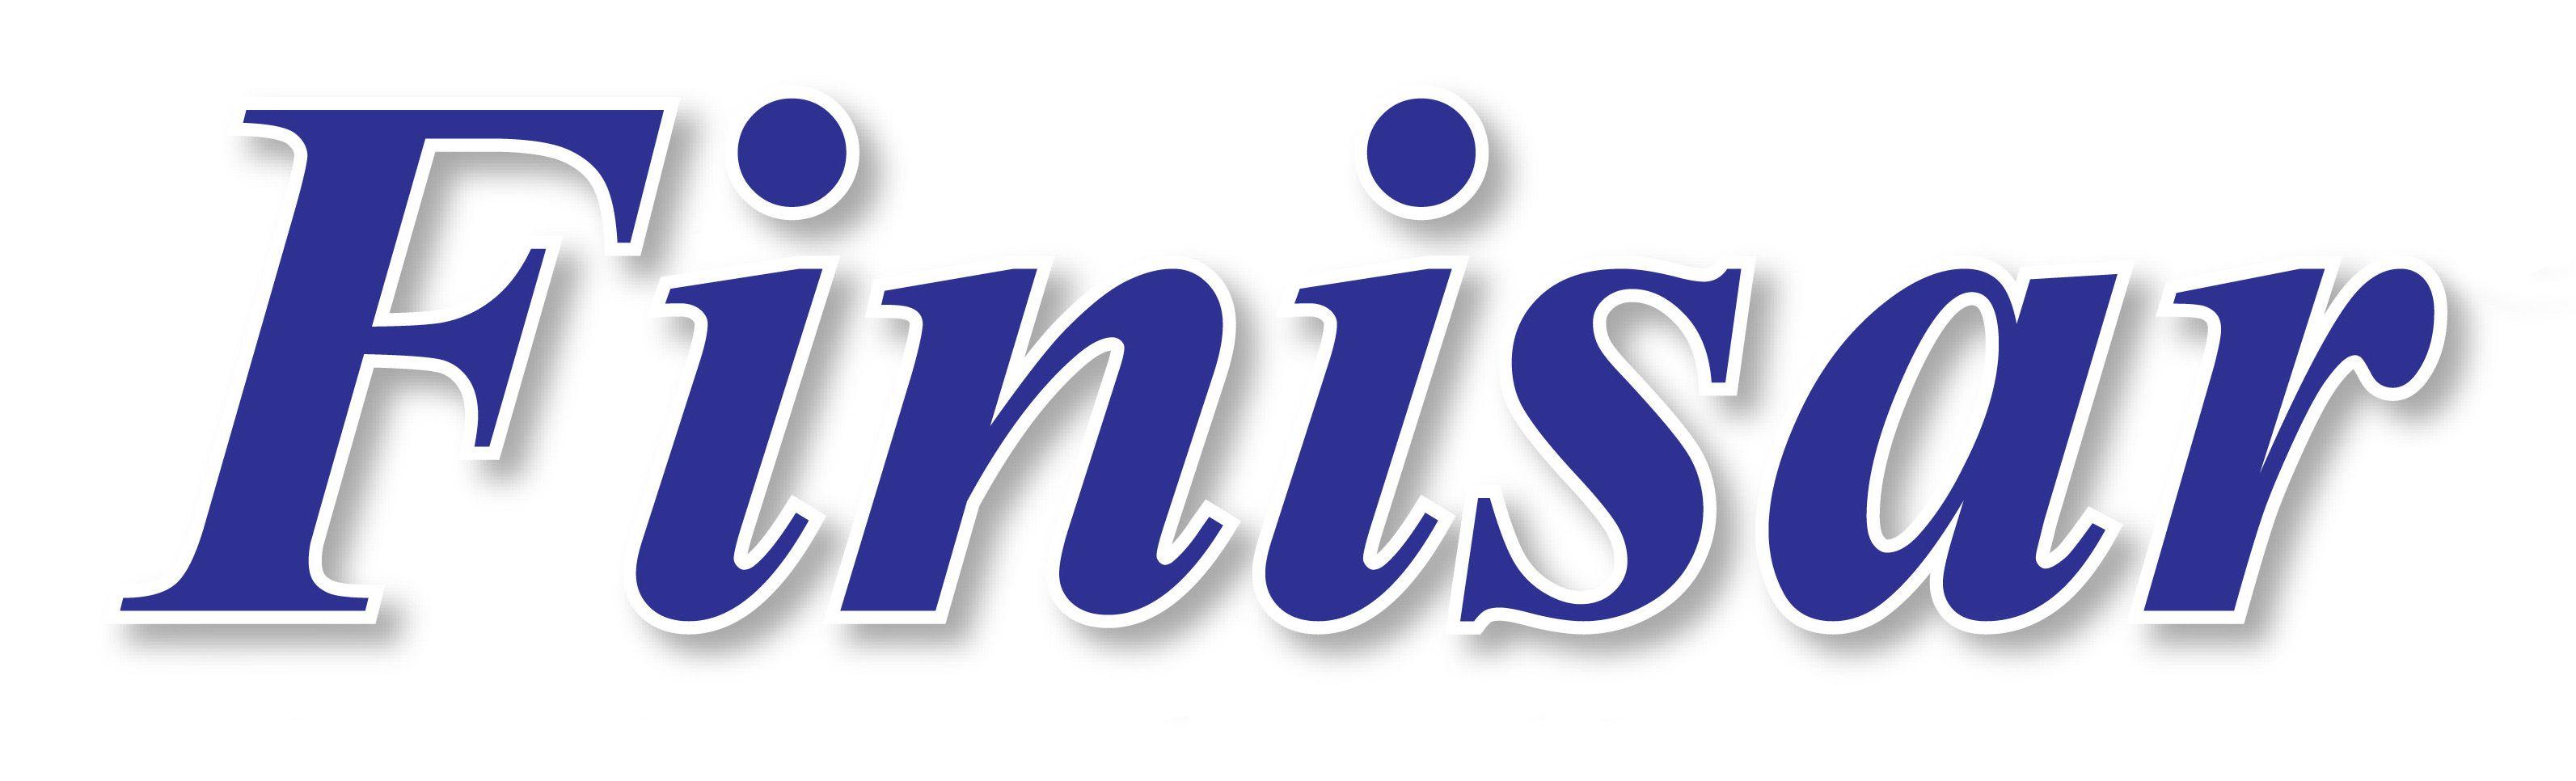 Finisar Logo - Finisar Corporation. $FNSR Stock. Shares Spike Up On Better Than